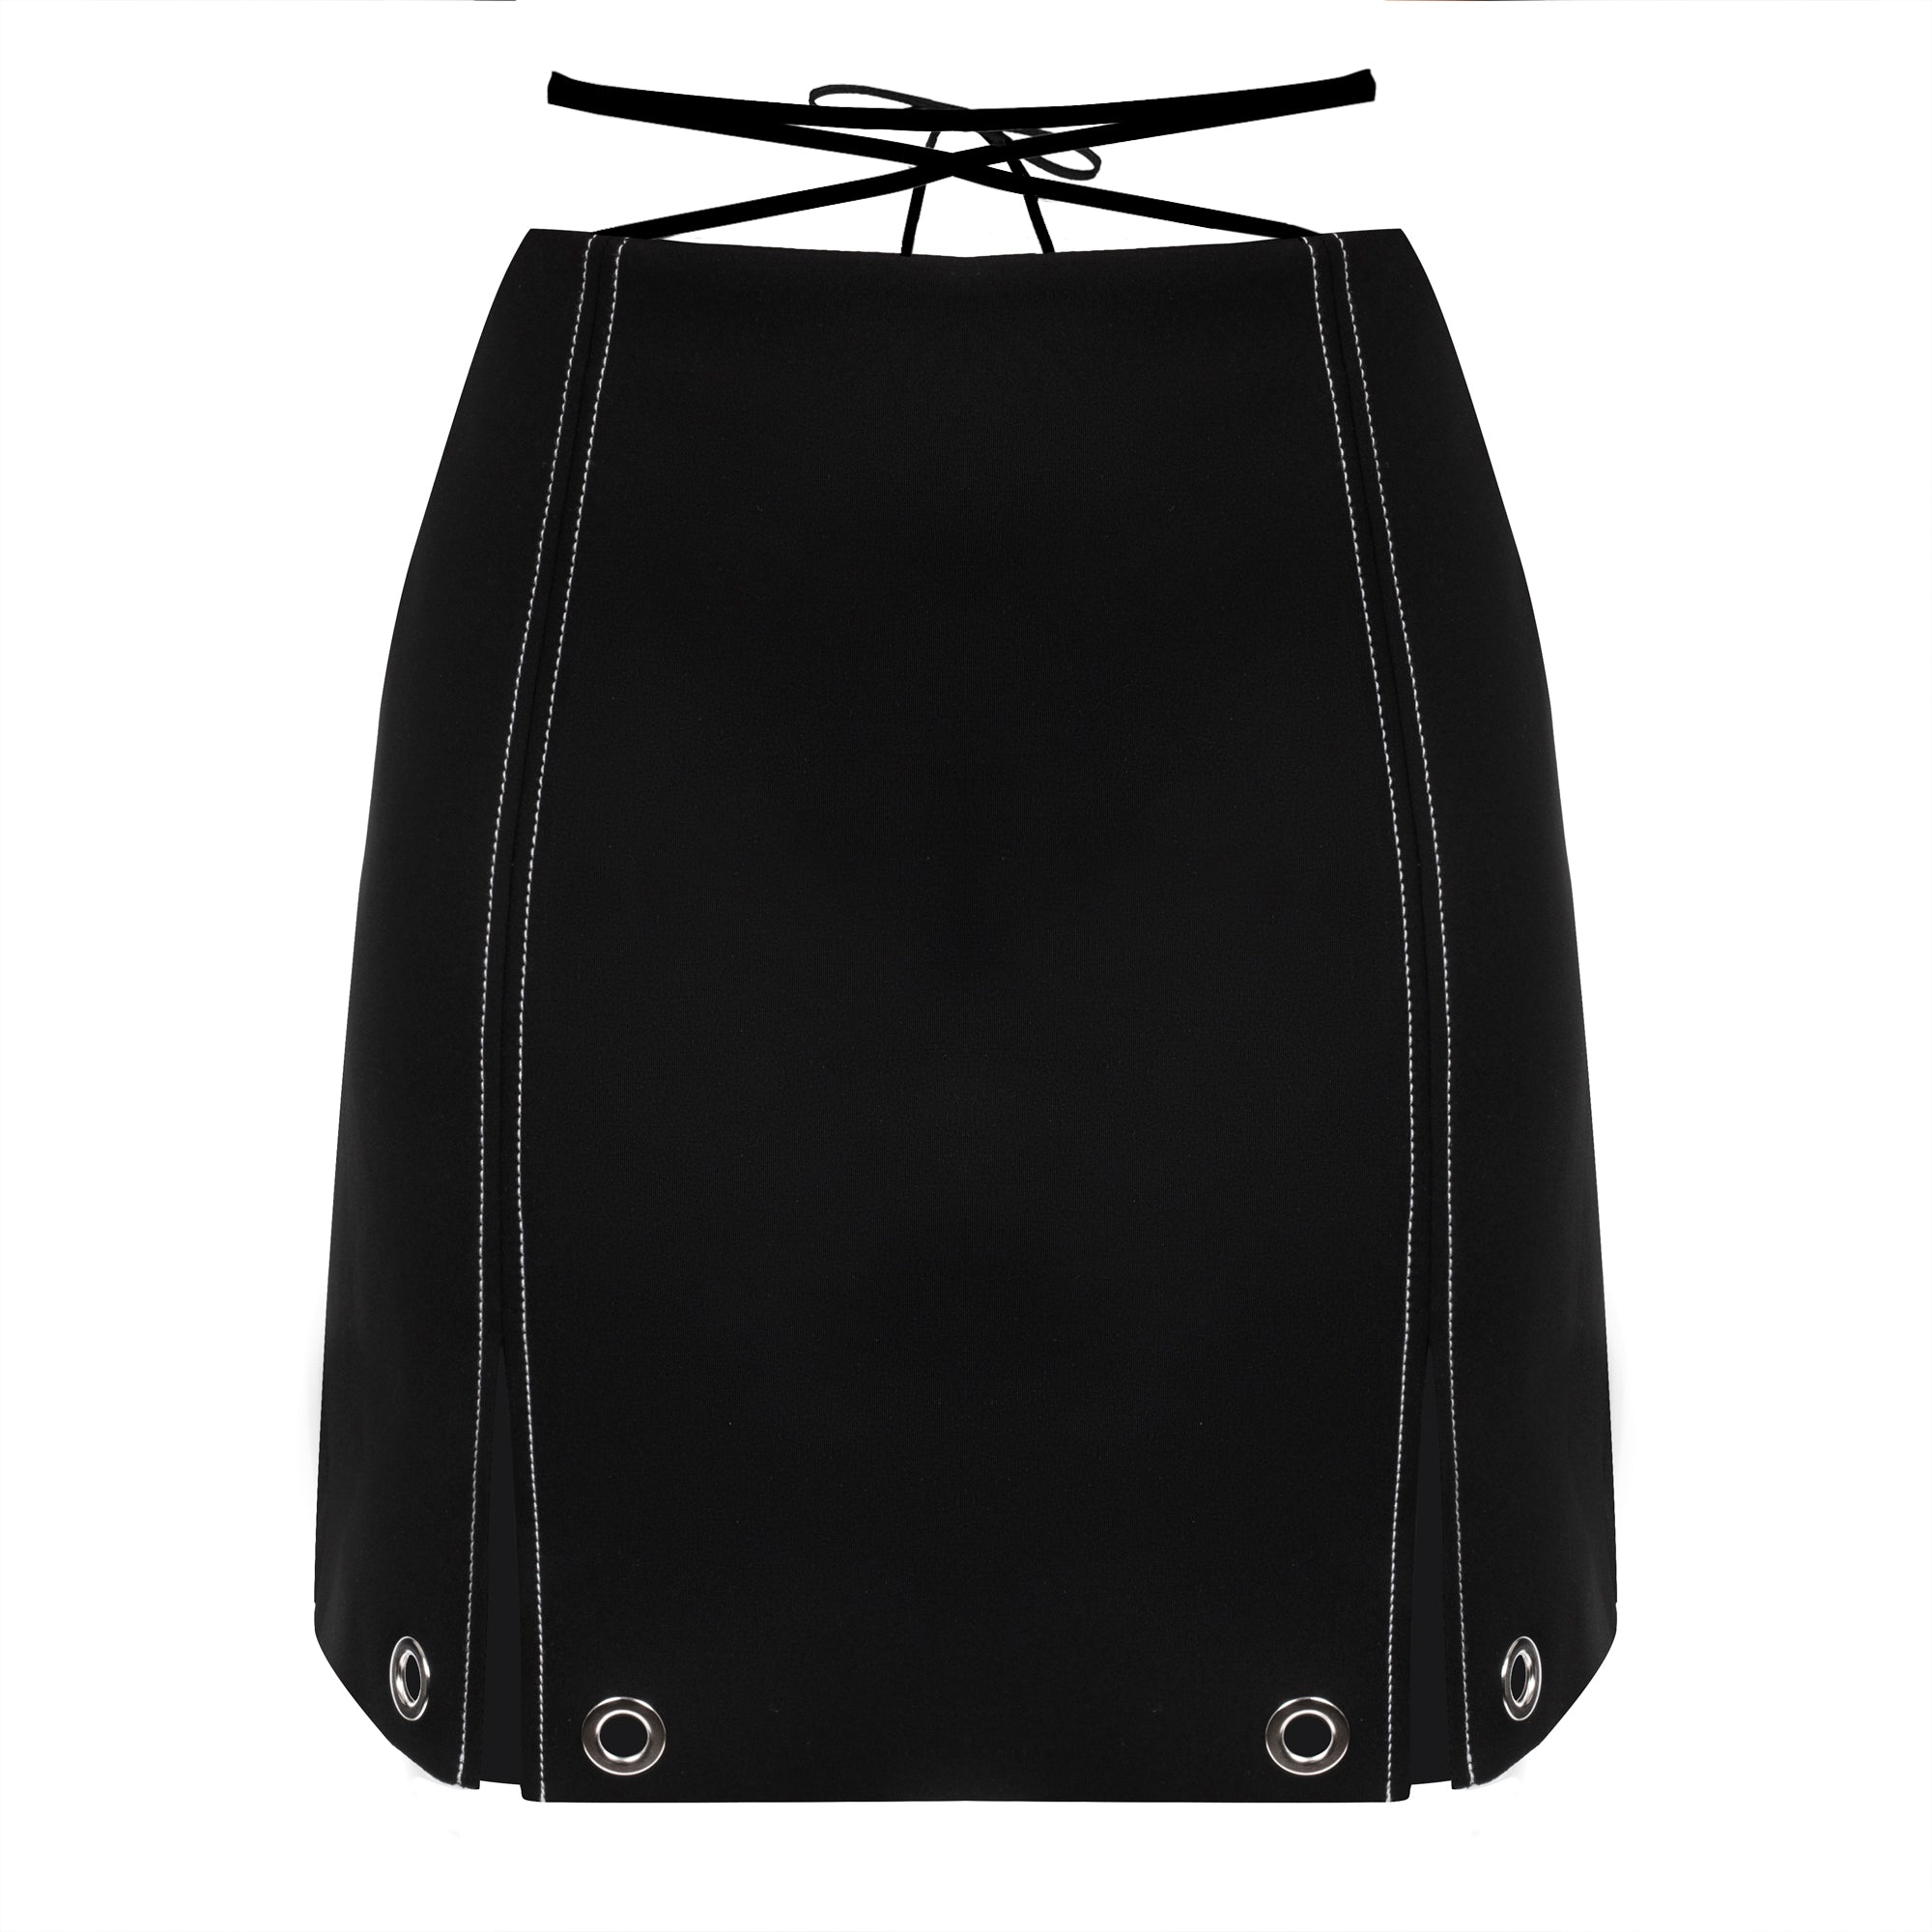 The Marina Skirt